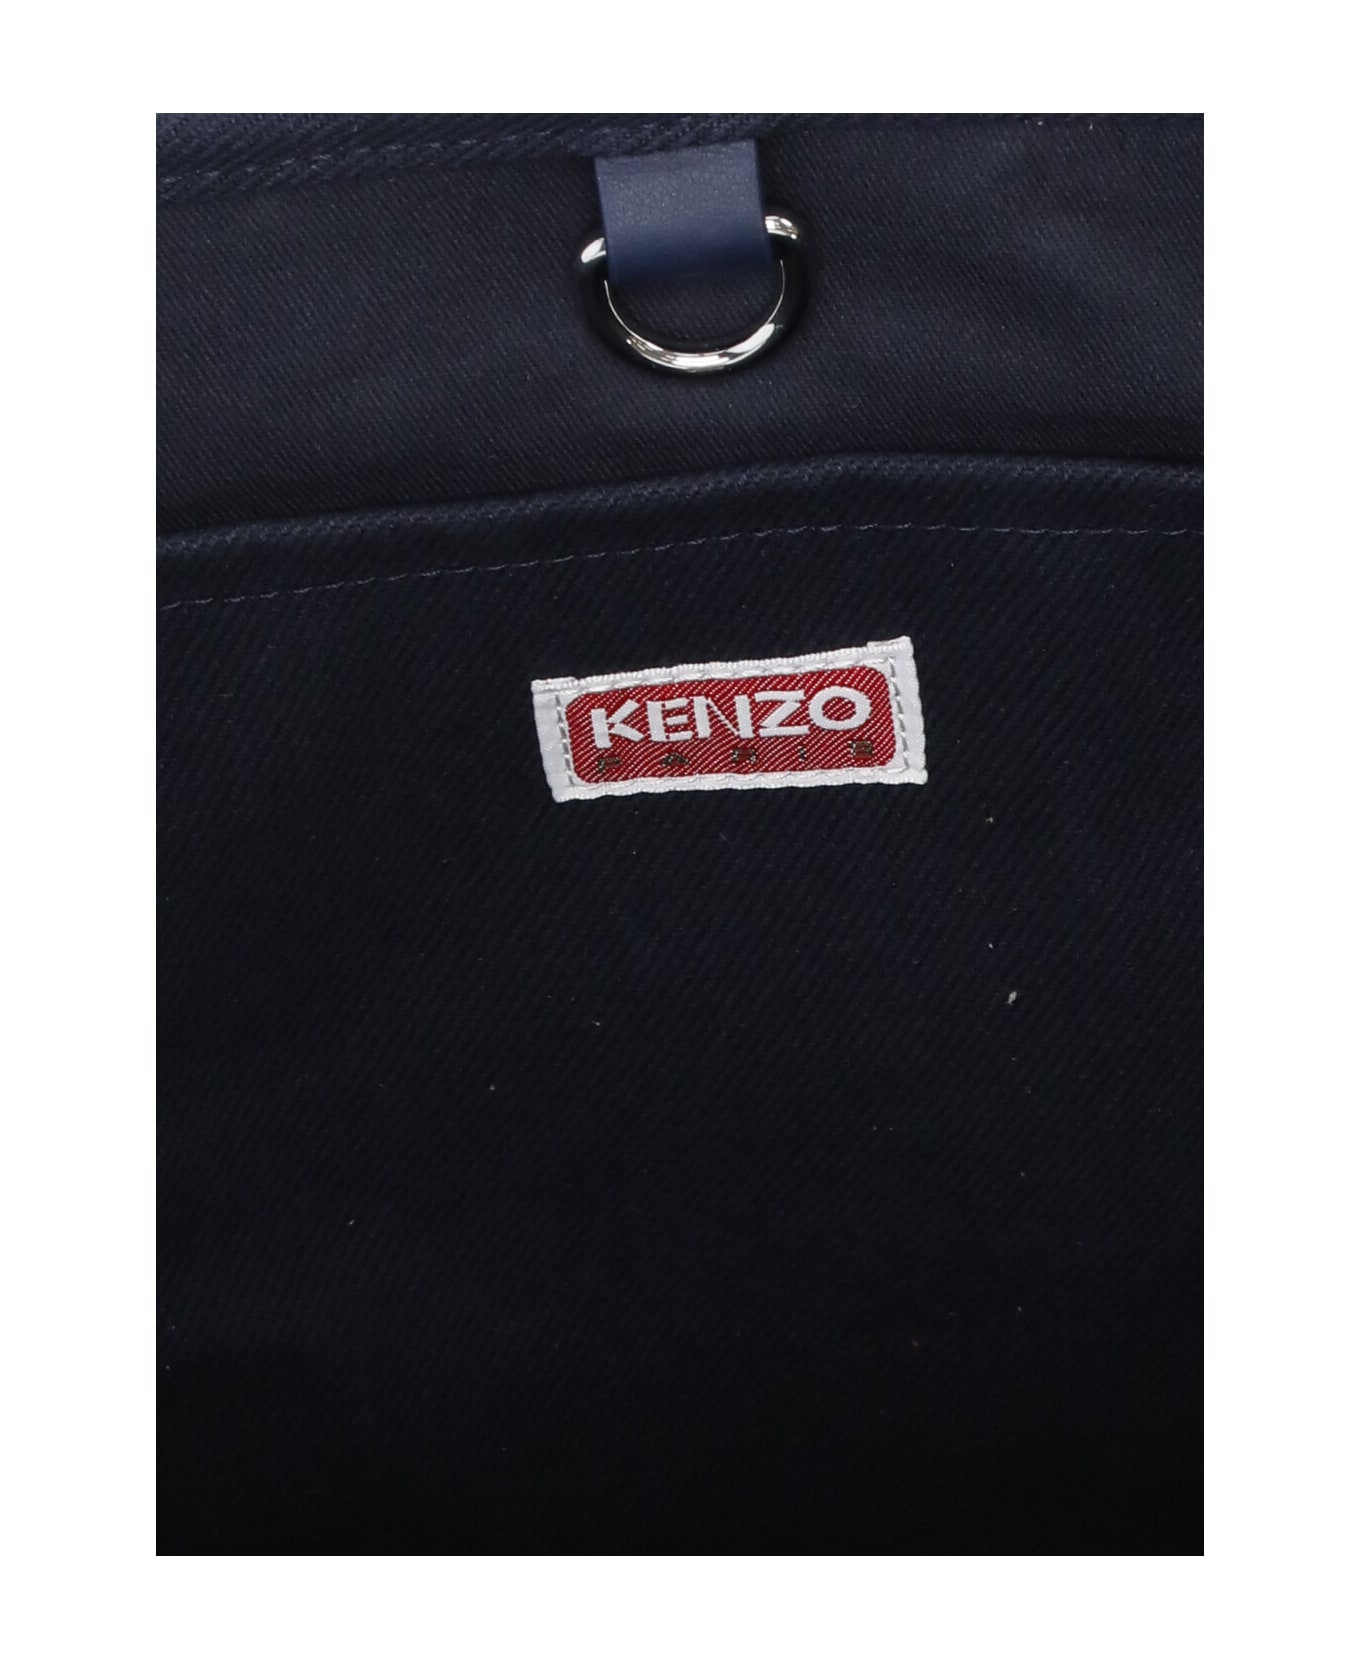 Kenzo 'tote' Bag - Blue